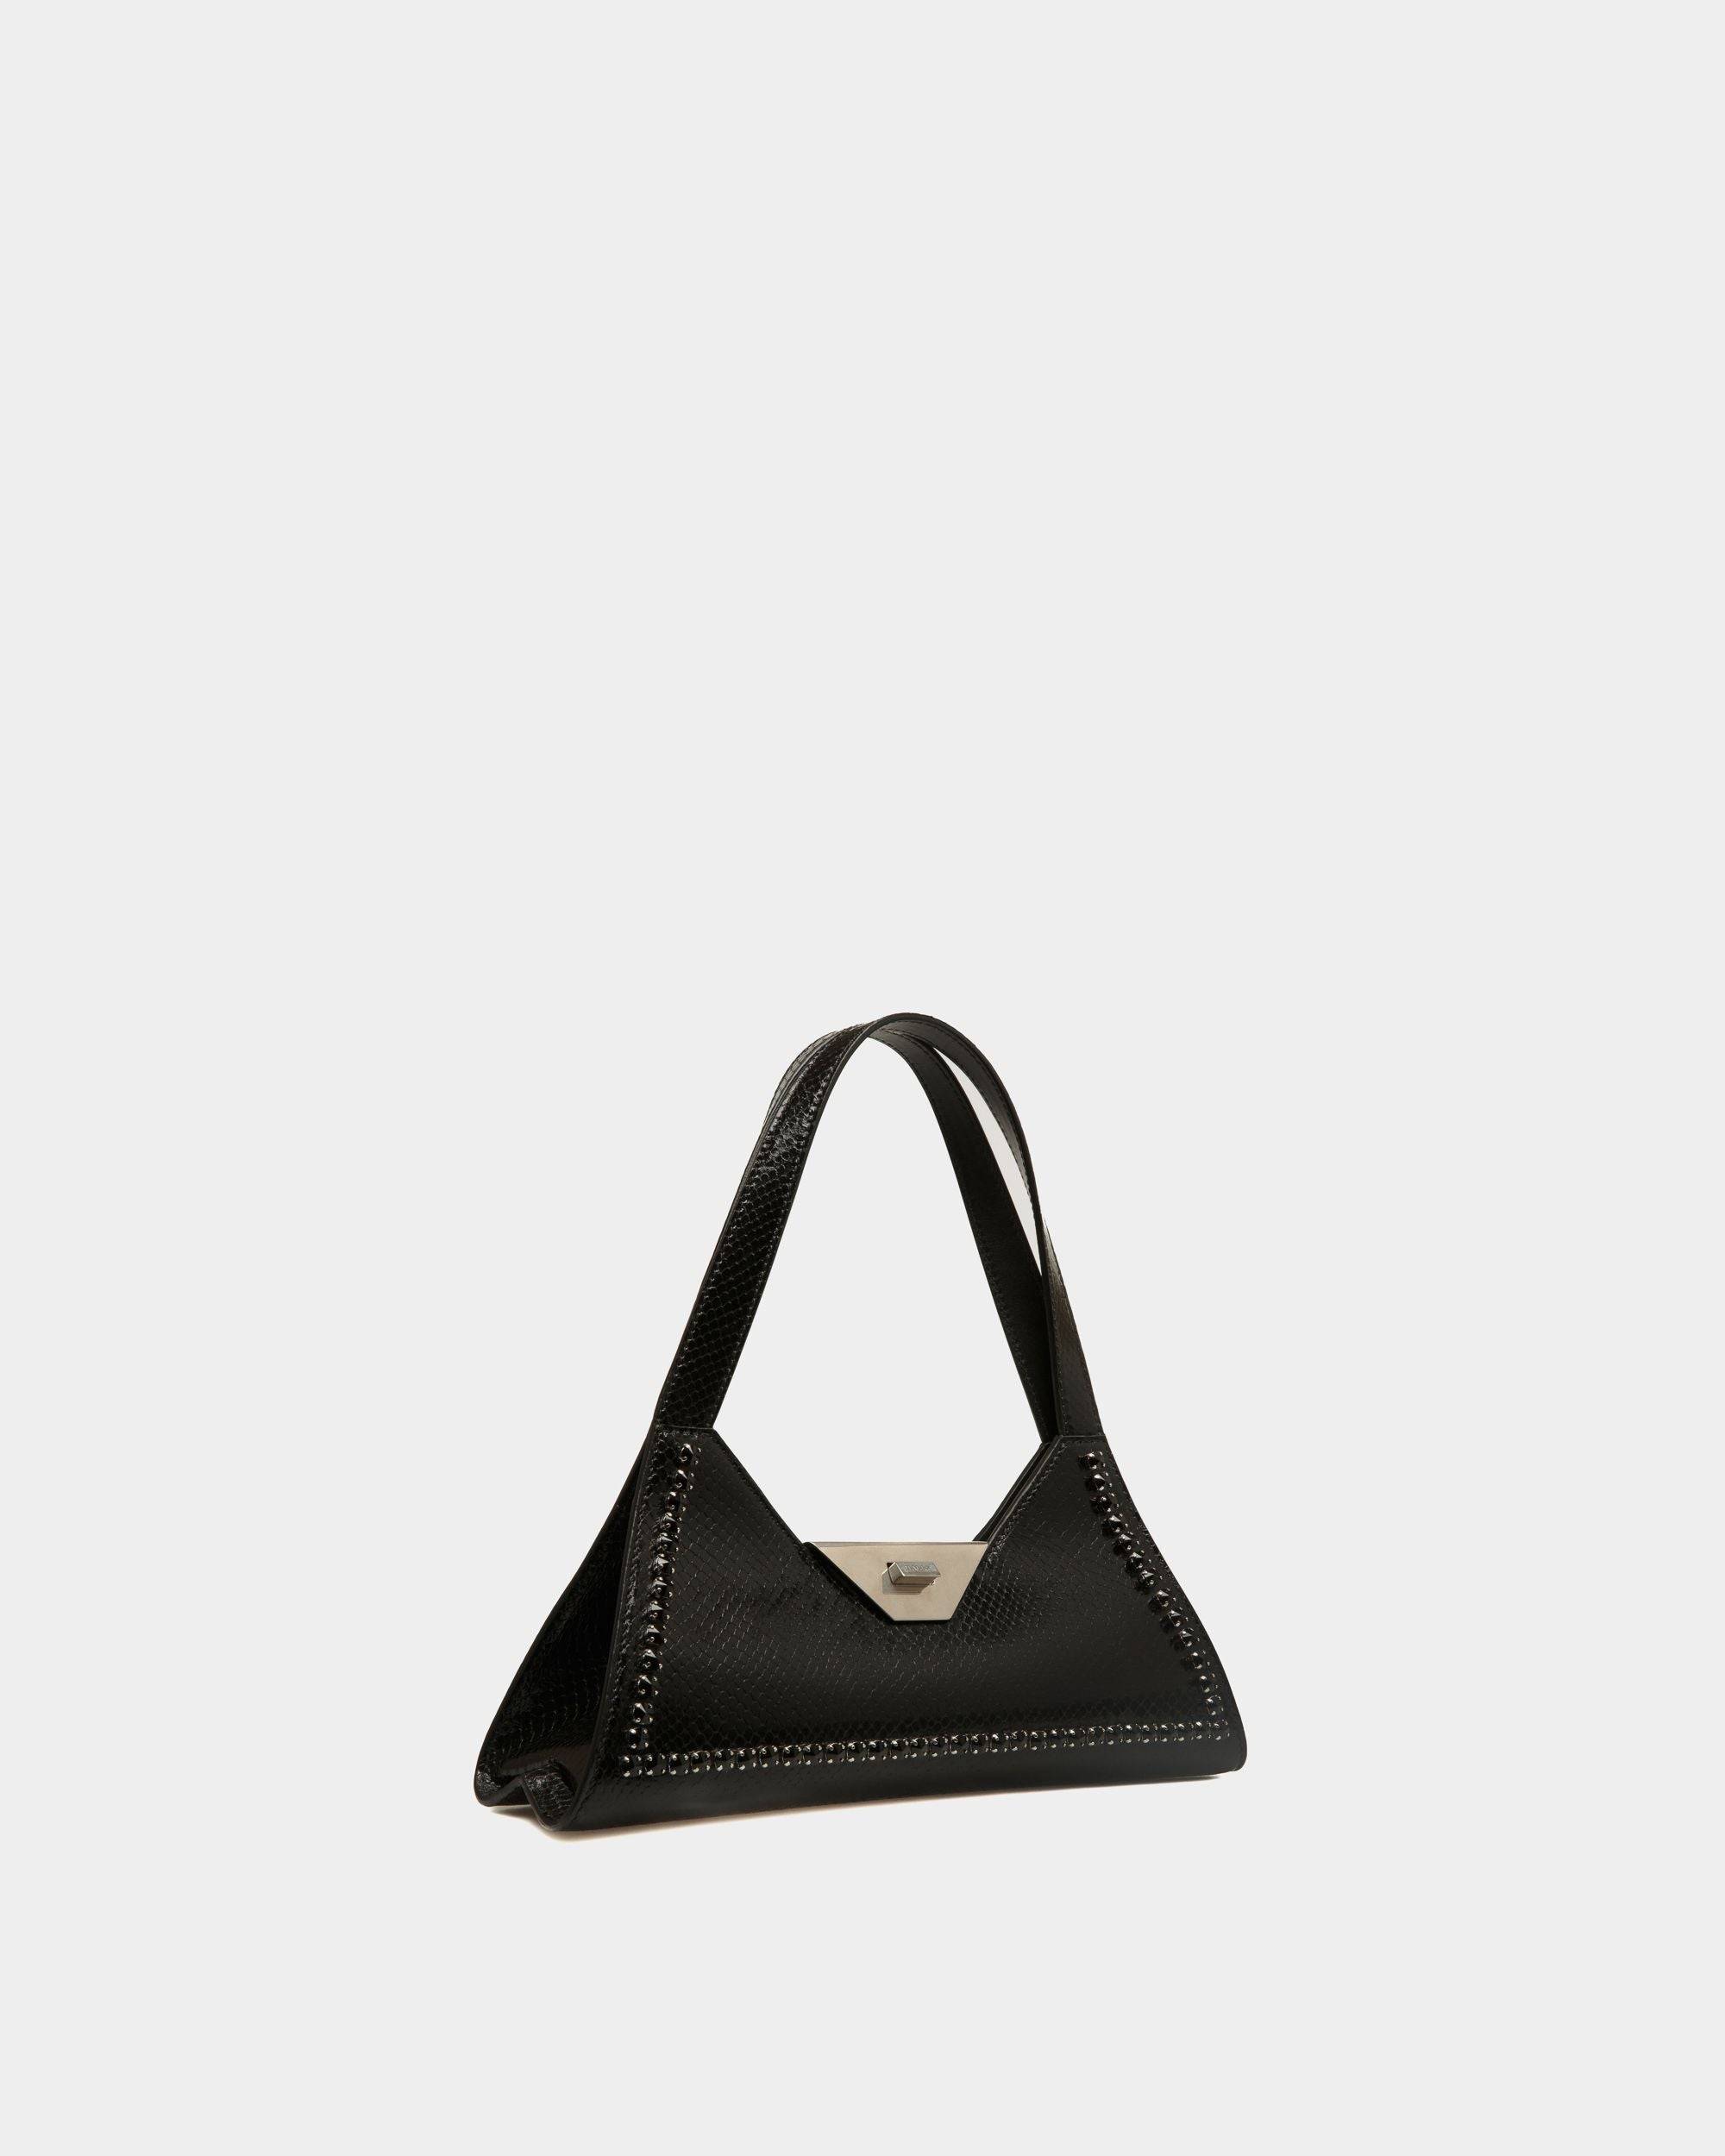 Tilt | Women's Small Shoulder Bag in Black Python Printed Leather | Bally | Still Life 3/4 Front